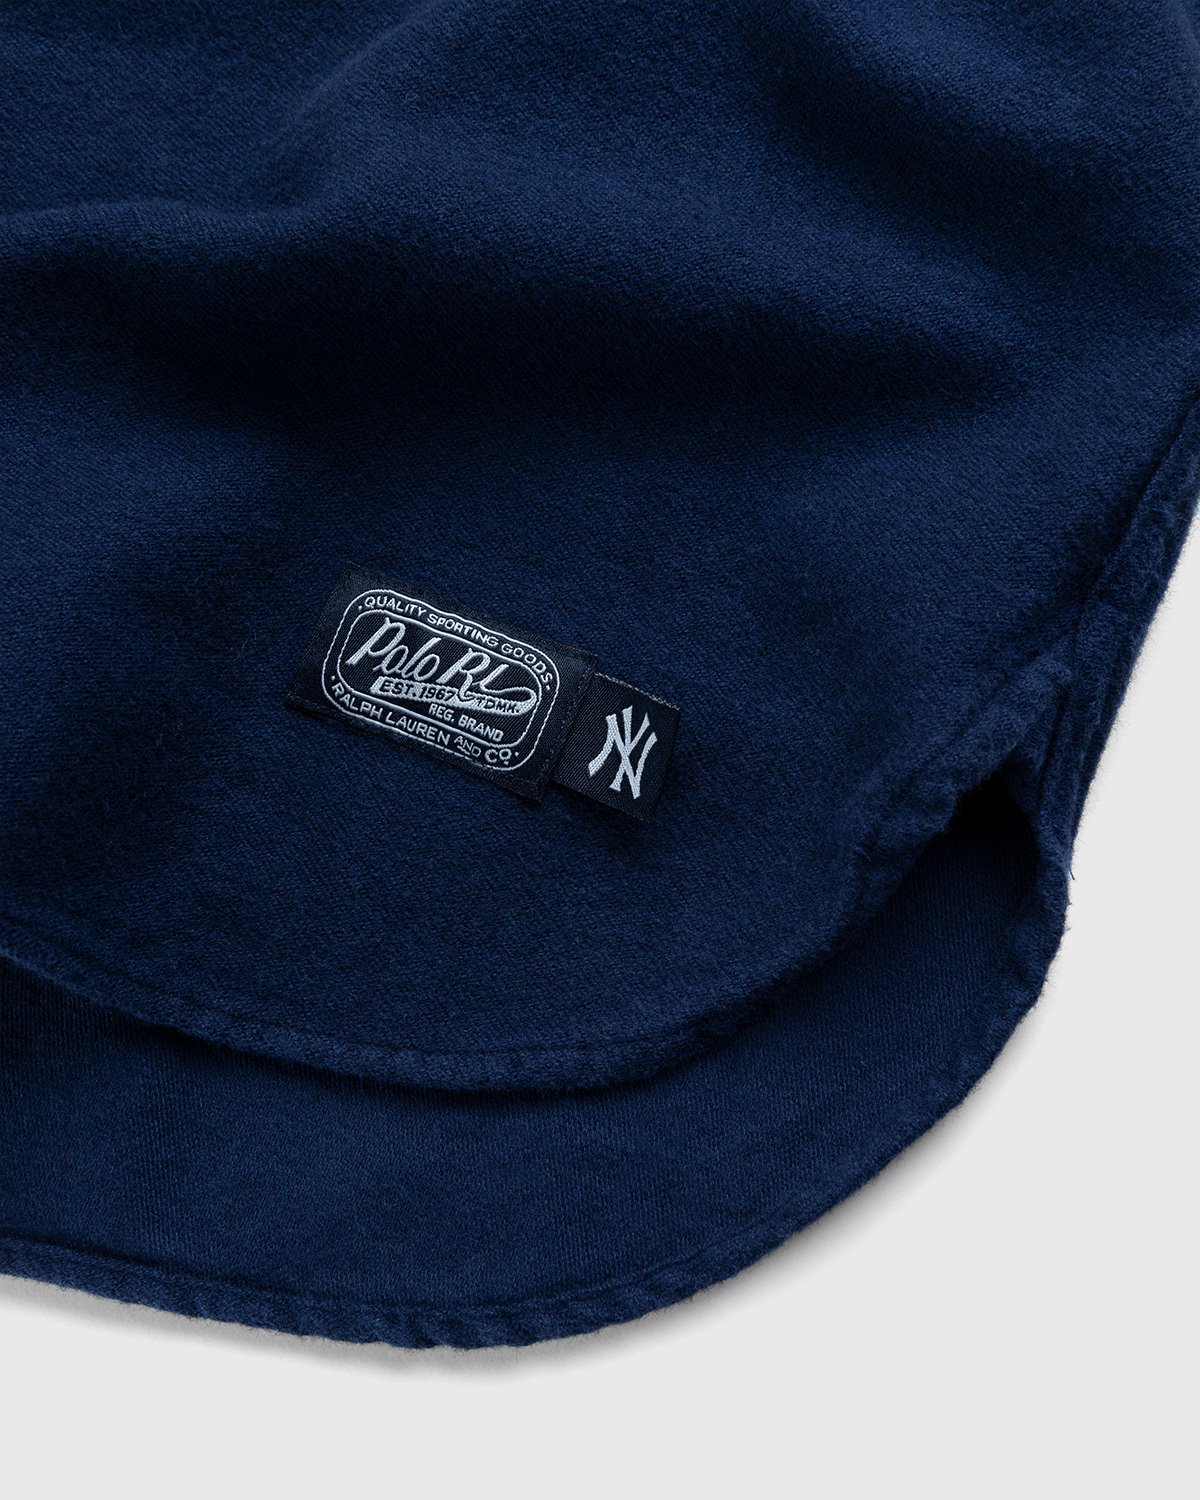 Ralph Lauren - Yankees Popover Shirt Navy - Clothing - Blue - Image 5